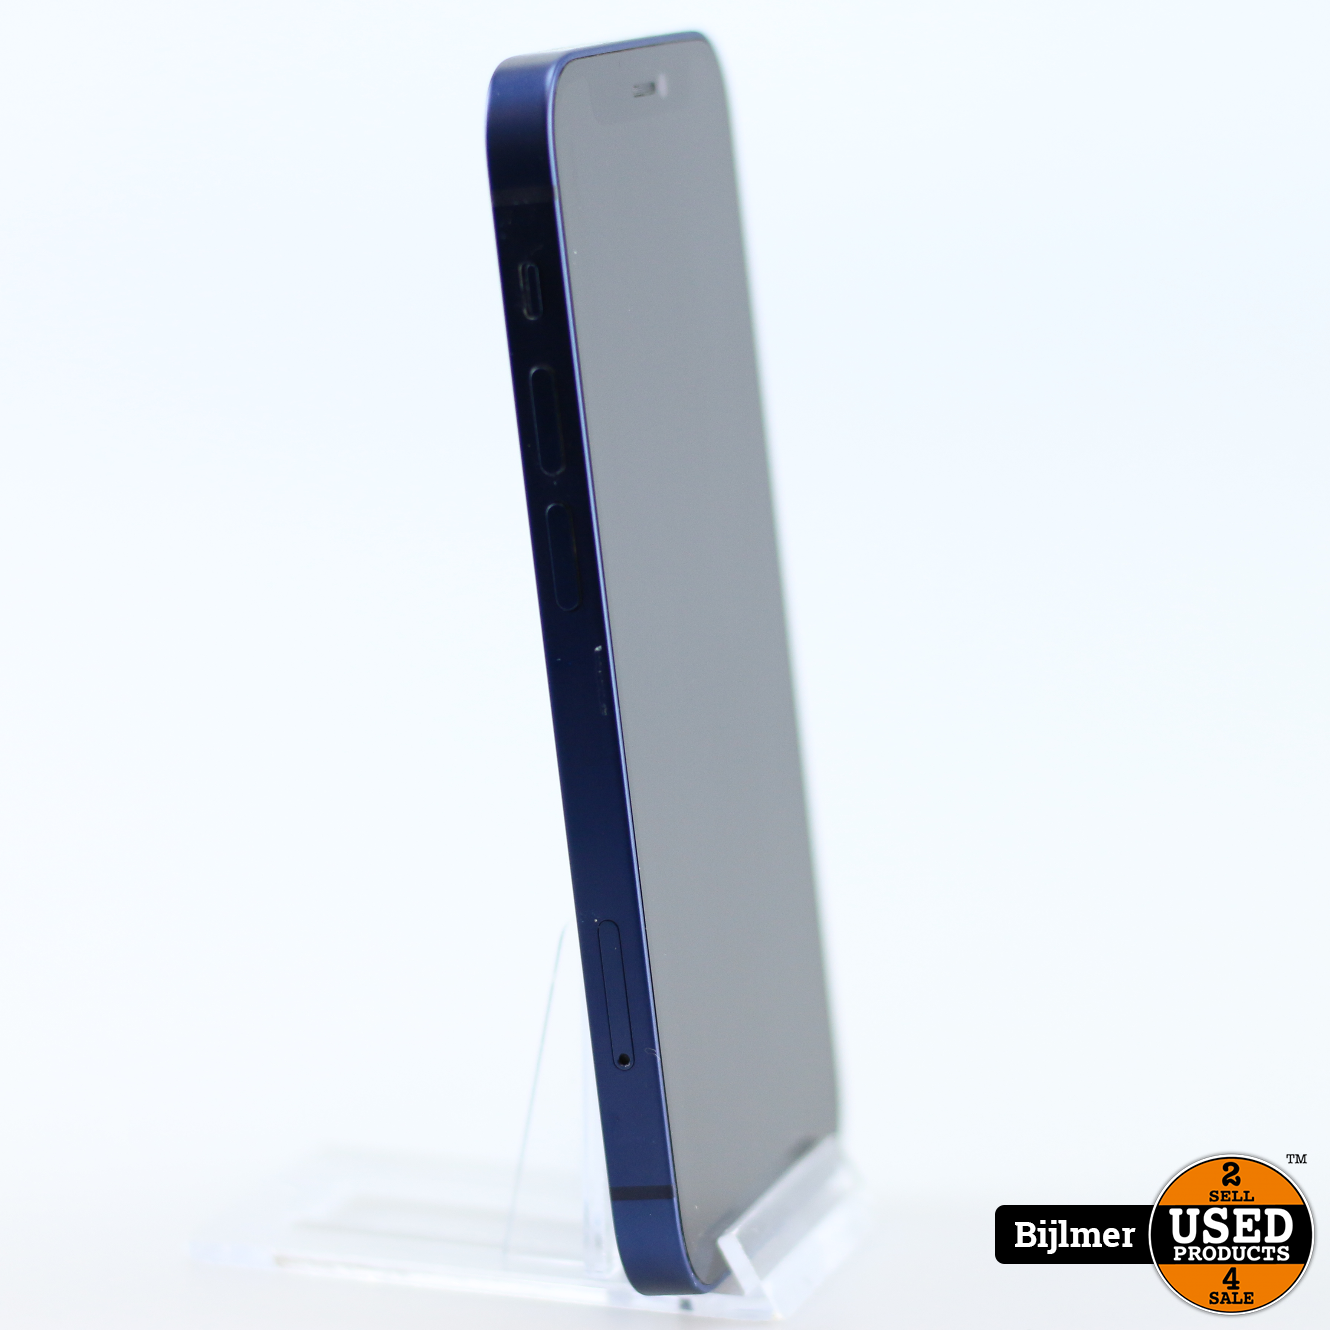 iPhone 12 Mini 128GB Blauw | Nette staat - Used Products Amsterdam Bijlmer